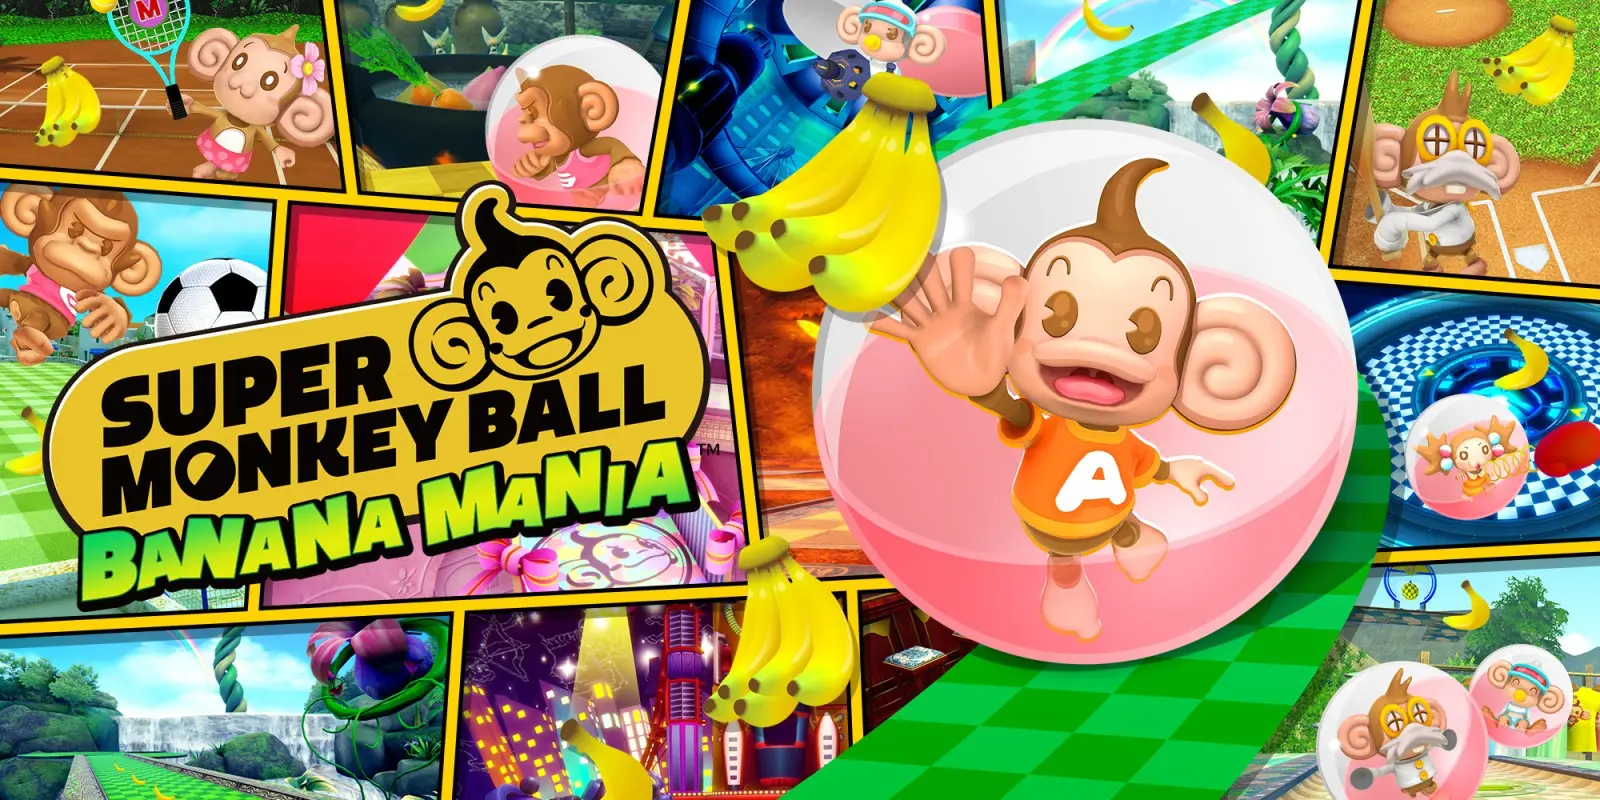 Top game Switch mới tháng 10: Metroid Dread, Super Monkey Ball Banana Mania